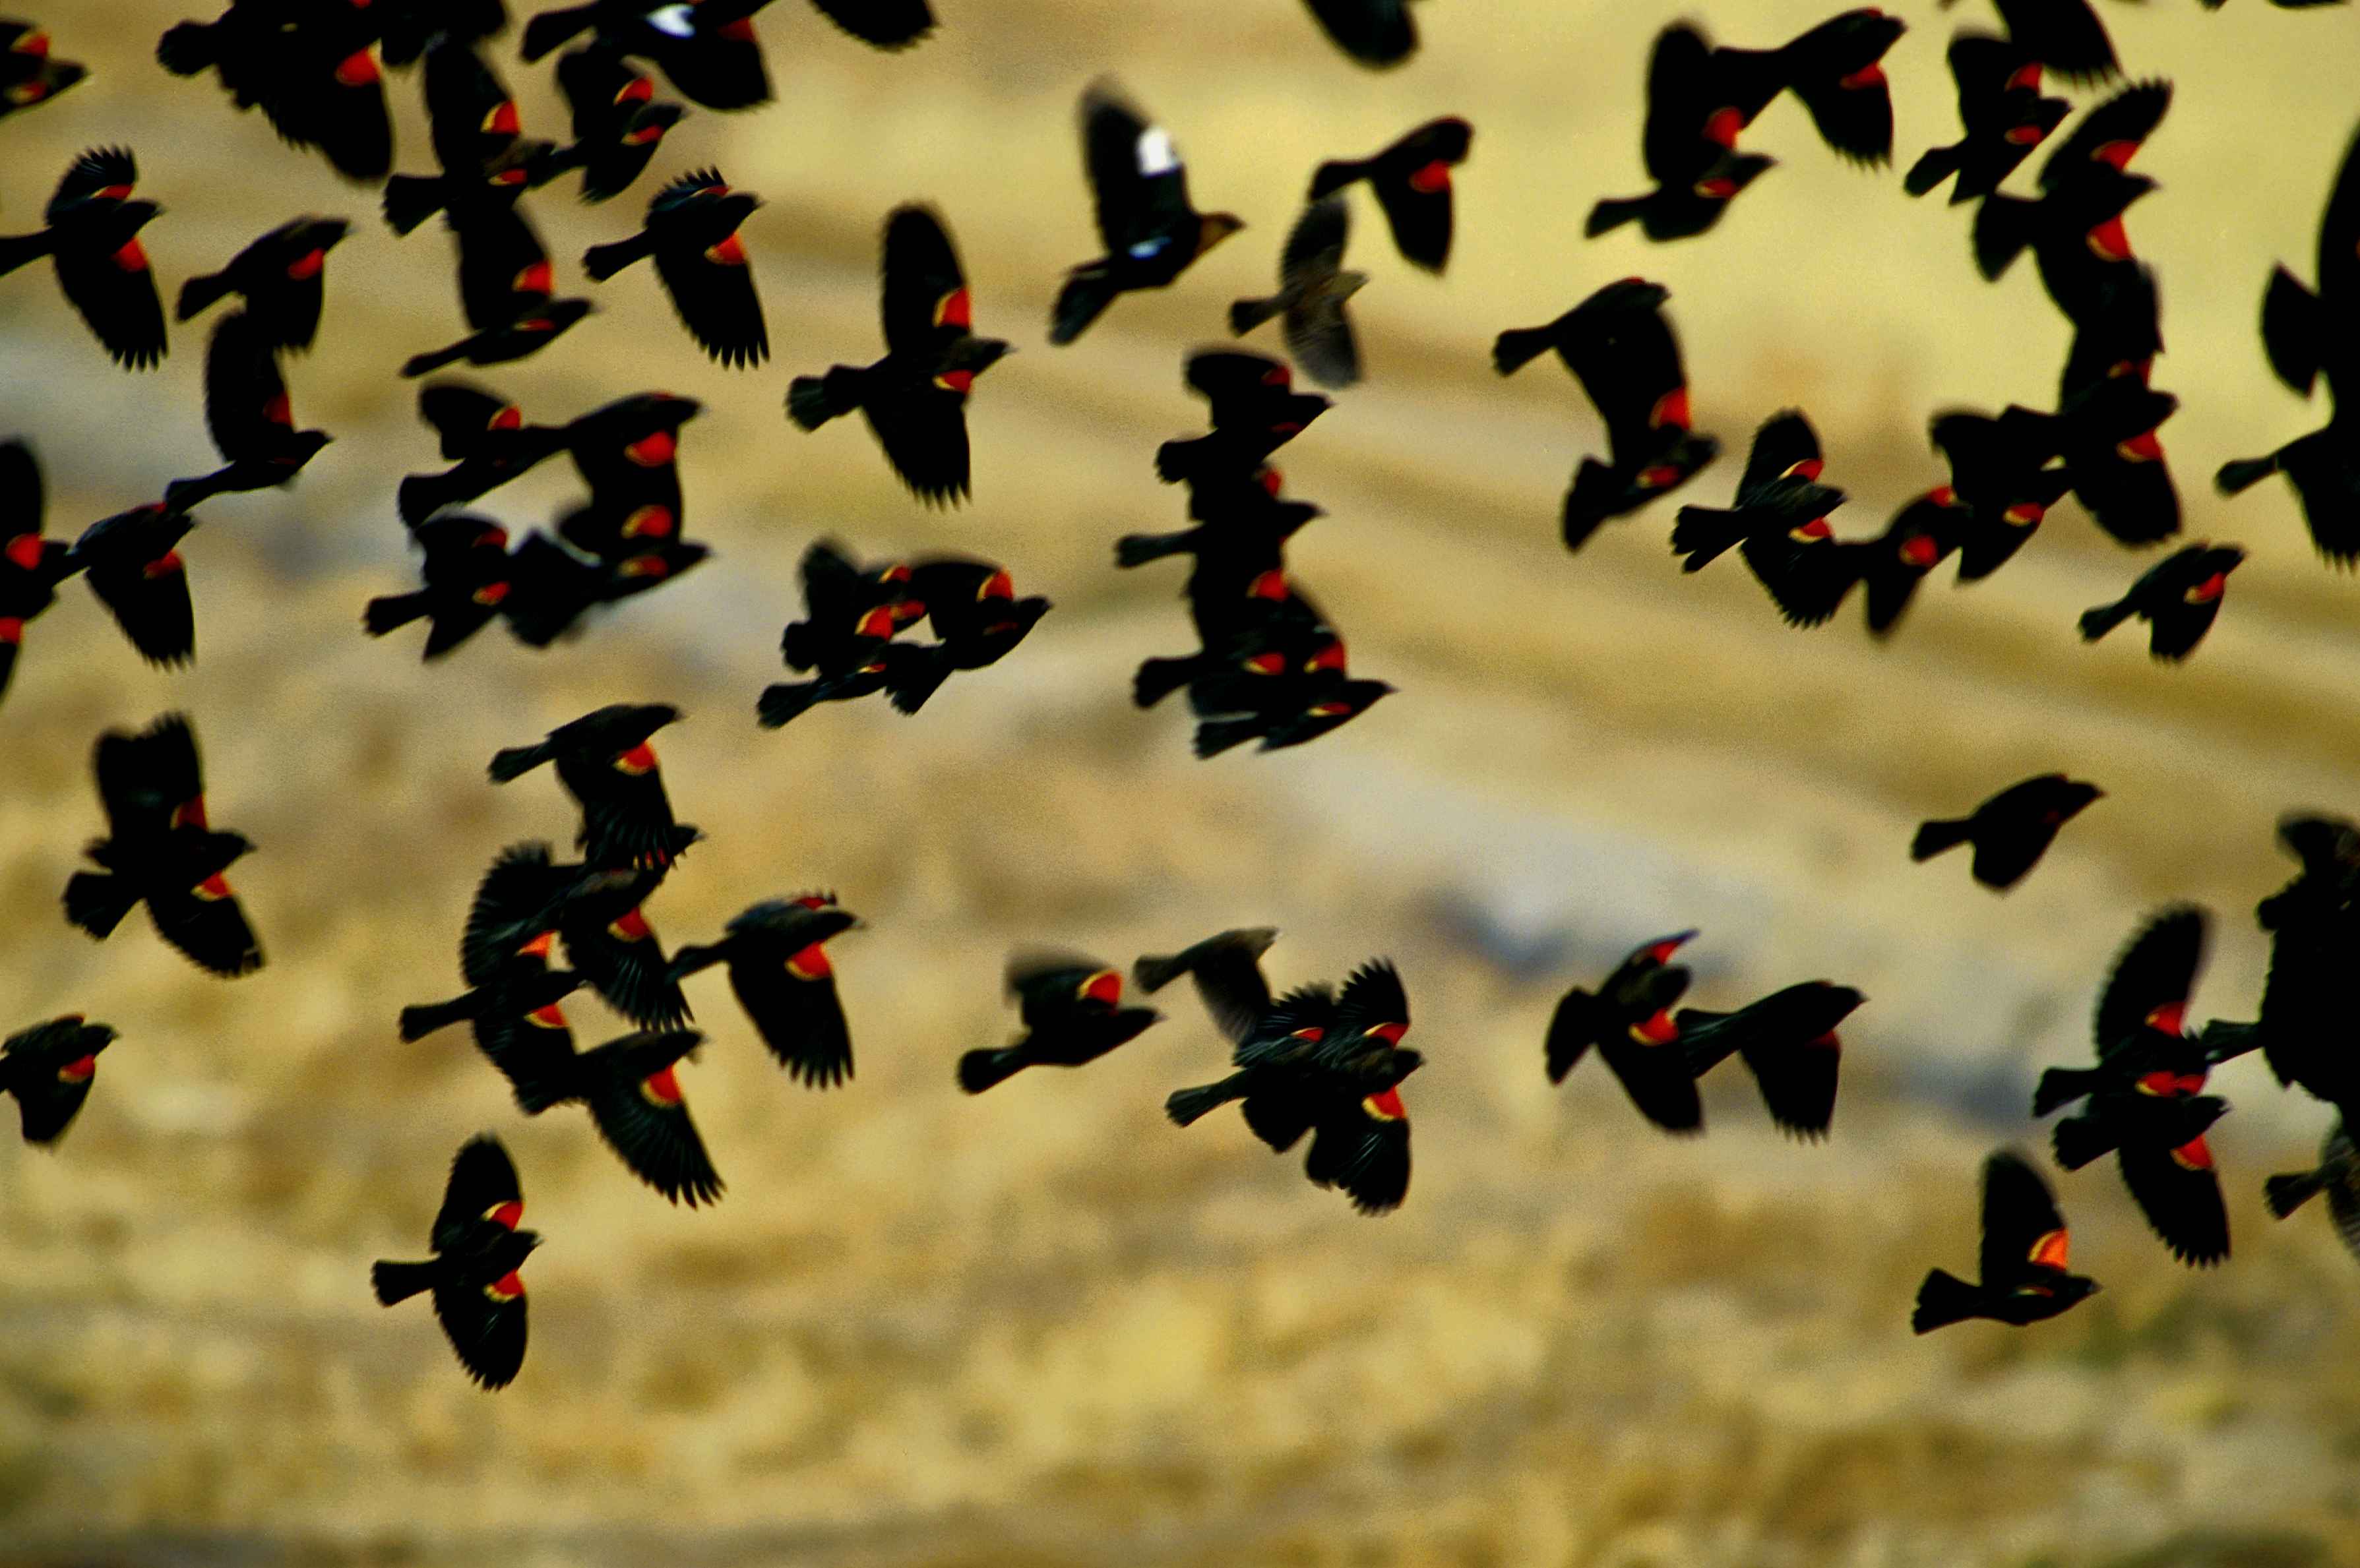 Red winged blackbird free image, public domain image